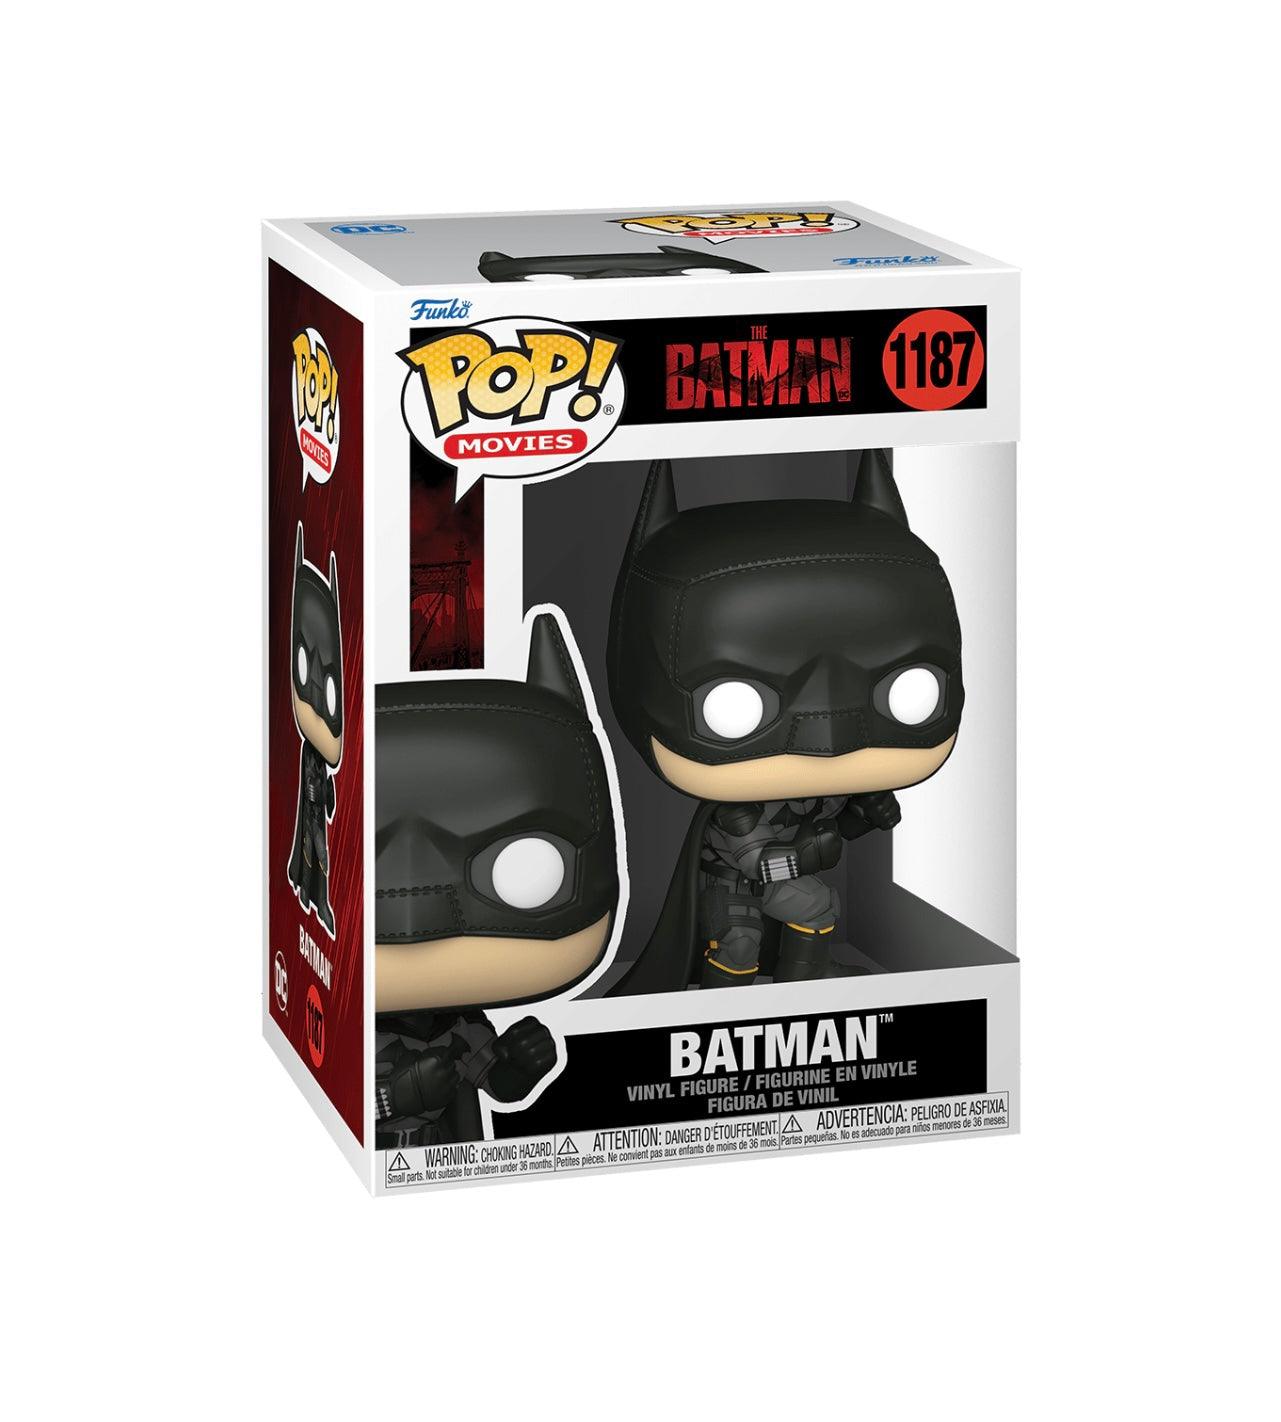 POP! Heroes The Batman #1187